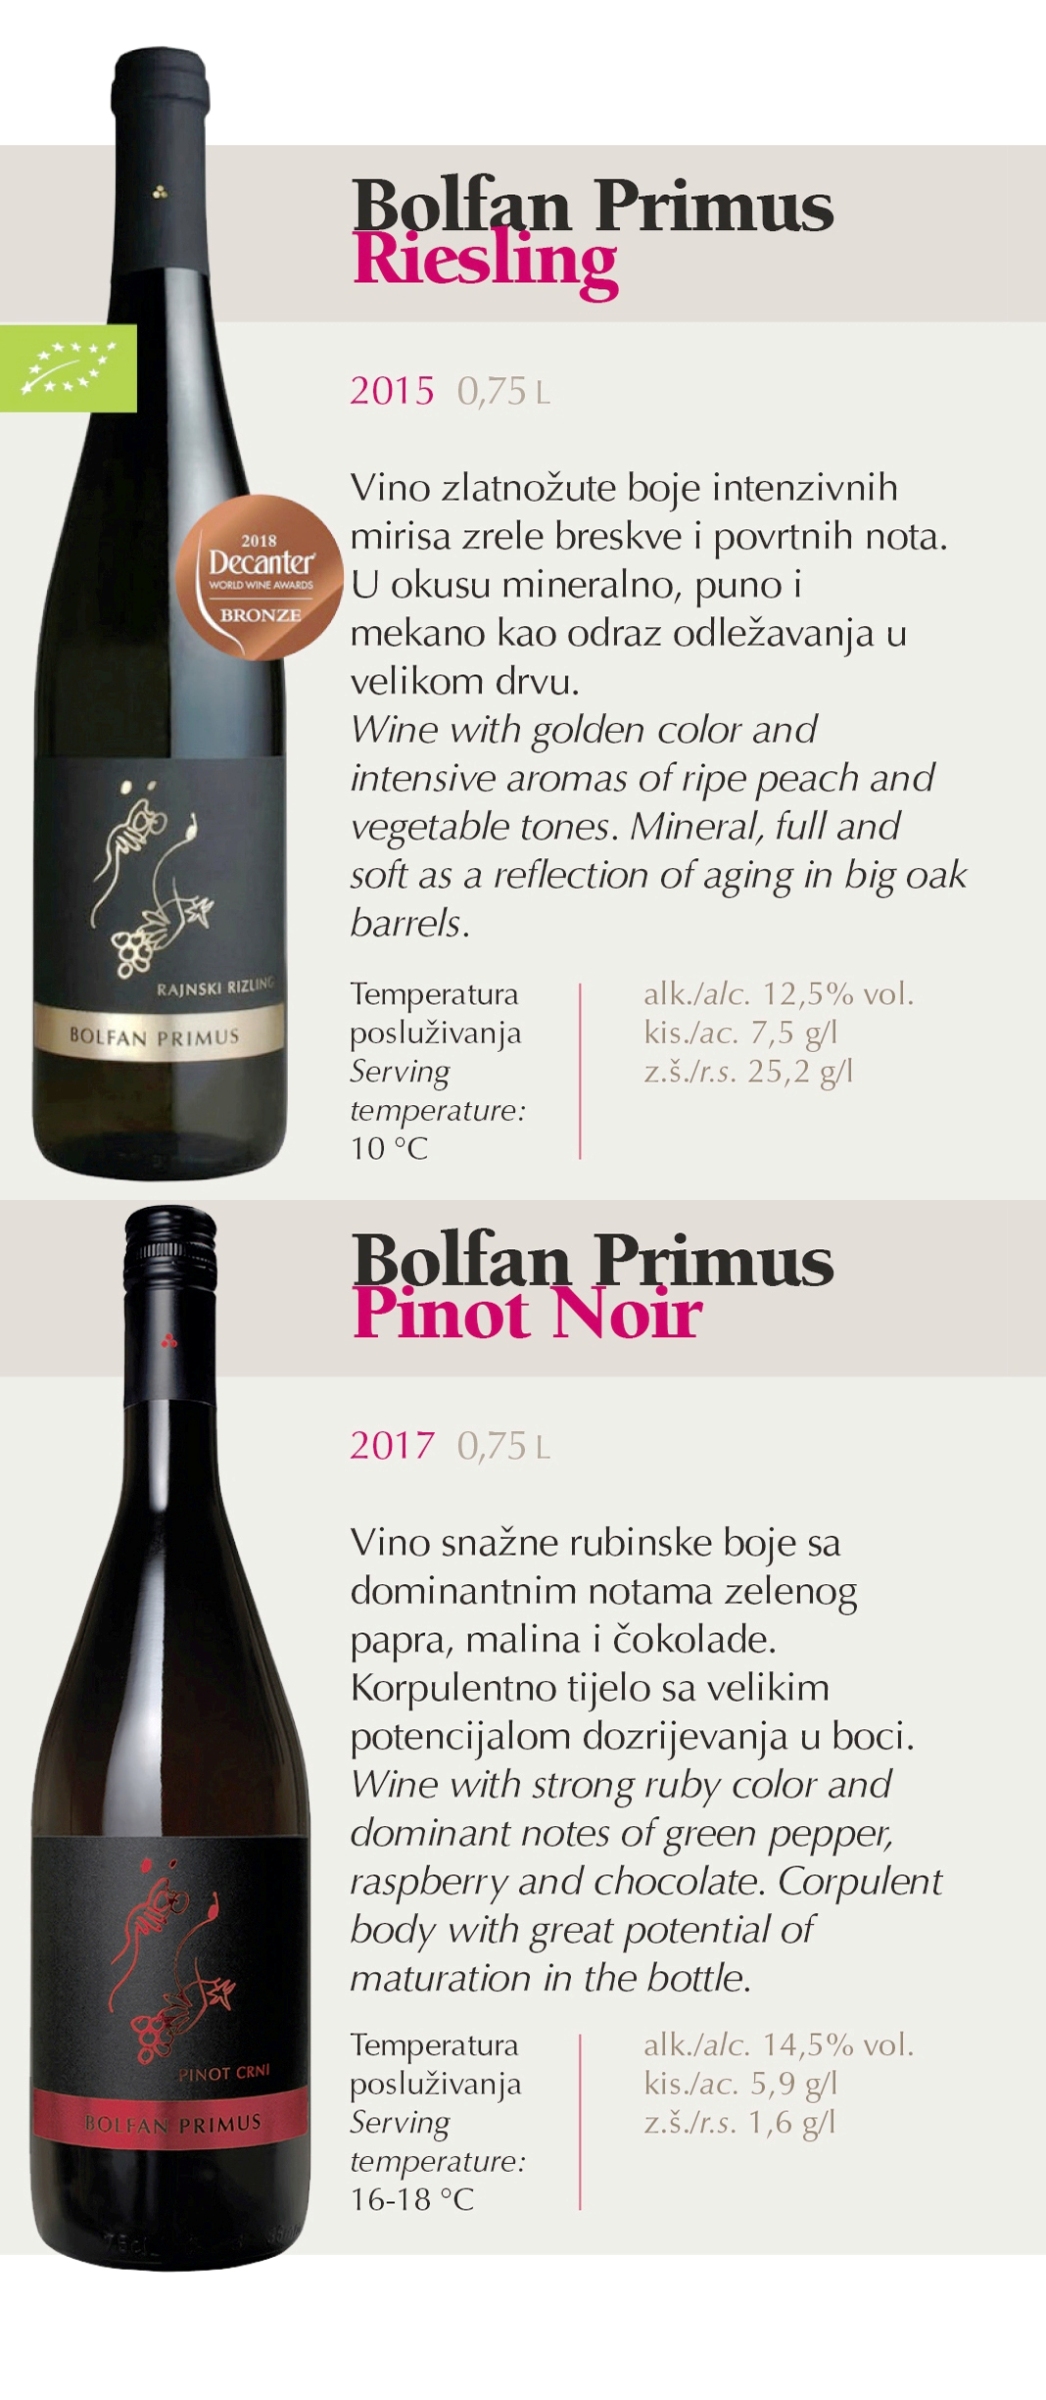 BOLFAN vina dostupna u VINORETUM Croatian fine wine shop-u!